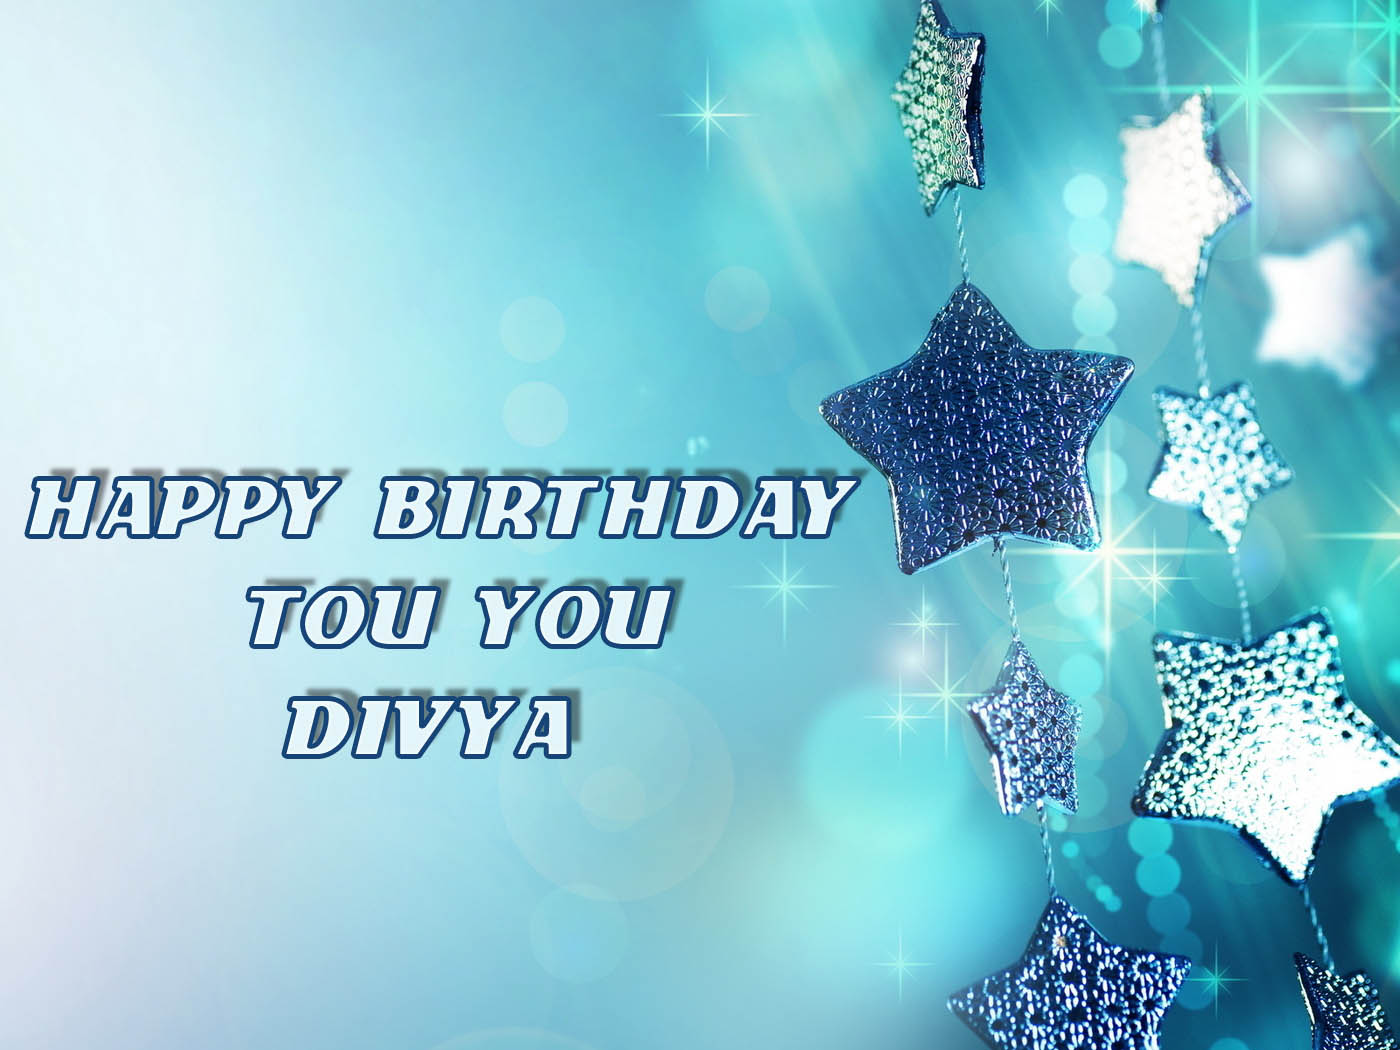 Happy Birthday Divya pictures congratulations.